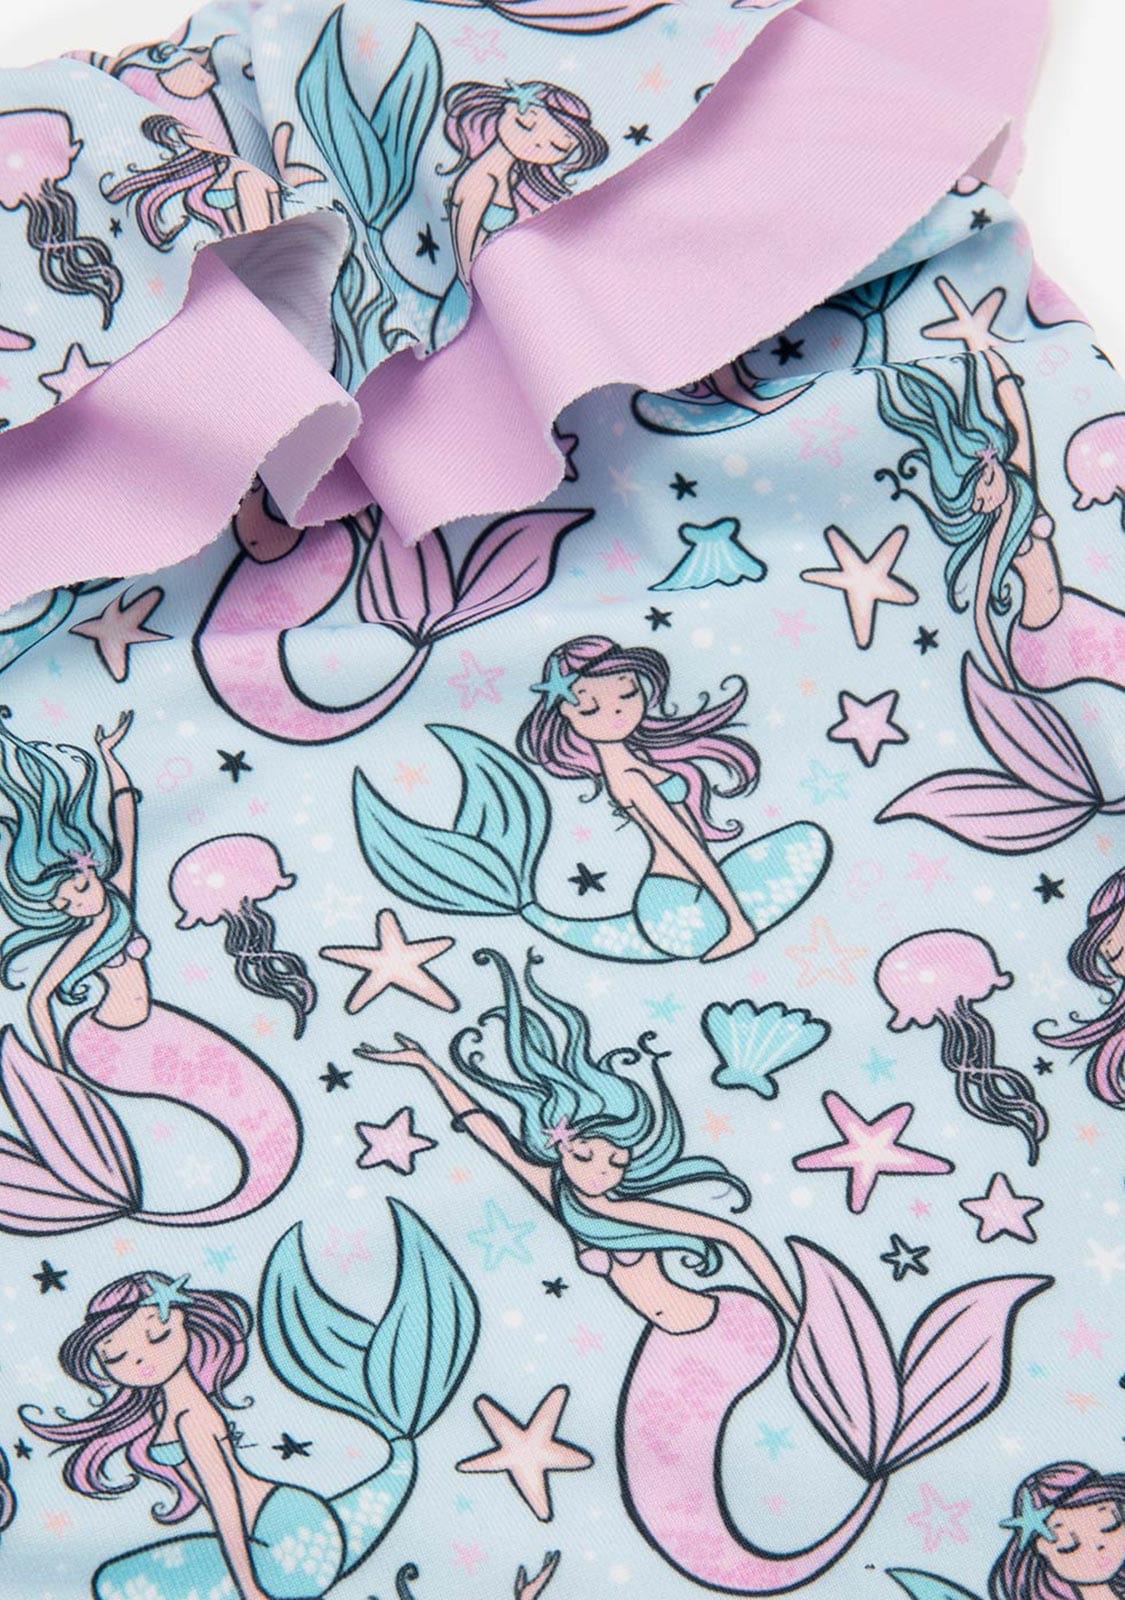 CONGUITOS TEXTIL Clothing Girl's Bluish Mermaid Swimsuit